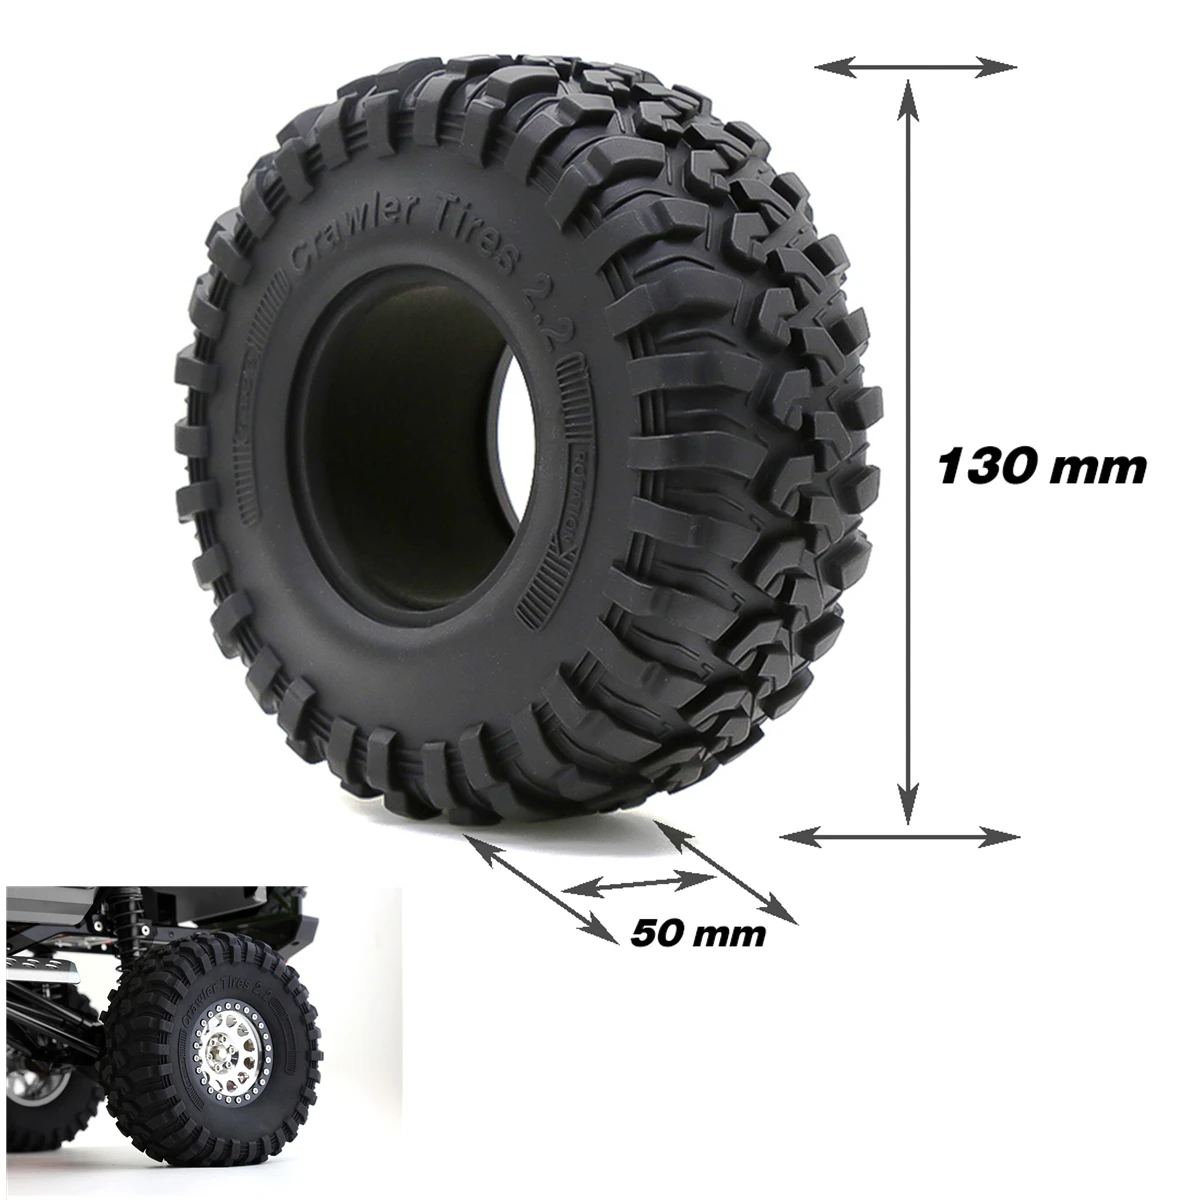 

4pcs 130mm 2.2" Rubber Rocks Tires Tyres for 1:10 RC Rock Crawler Traxxas Trx4 Axial SCX10 90047 D90 D110 TF2 RR10 Wraith